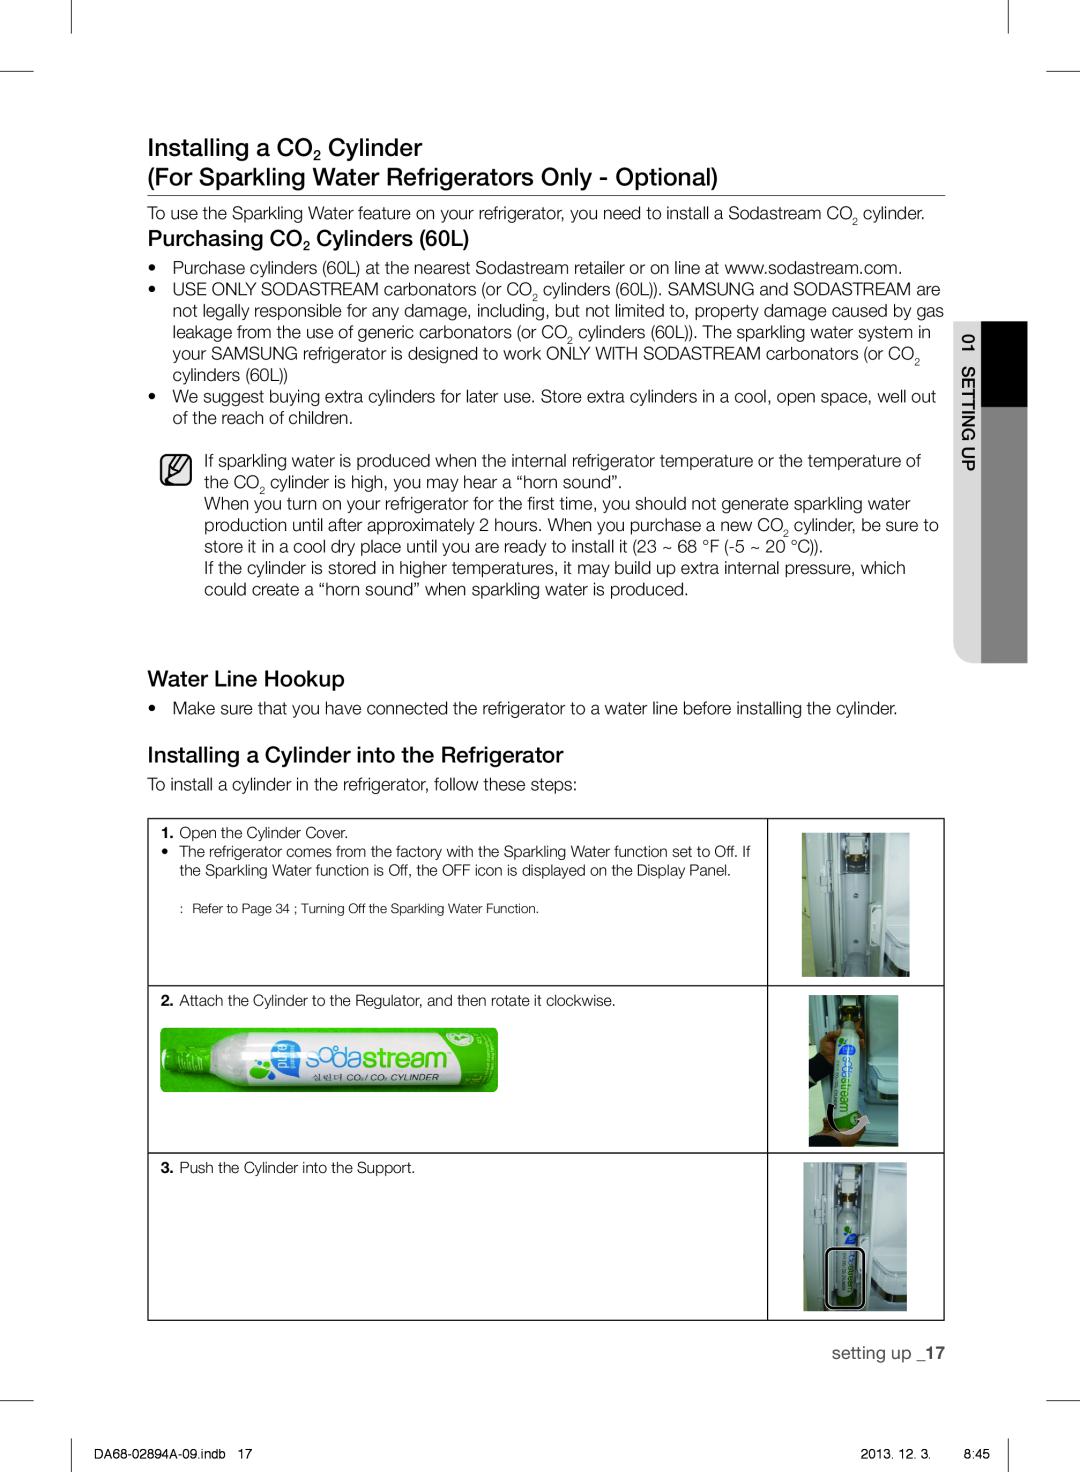 Samsung RF31FMEDBBC Installing a CO2 Cylinder, For Sparkling Water Refrigerators Only - Optional, Water Line Hookup 